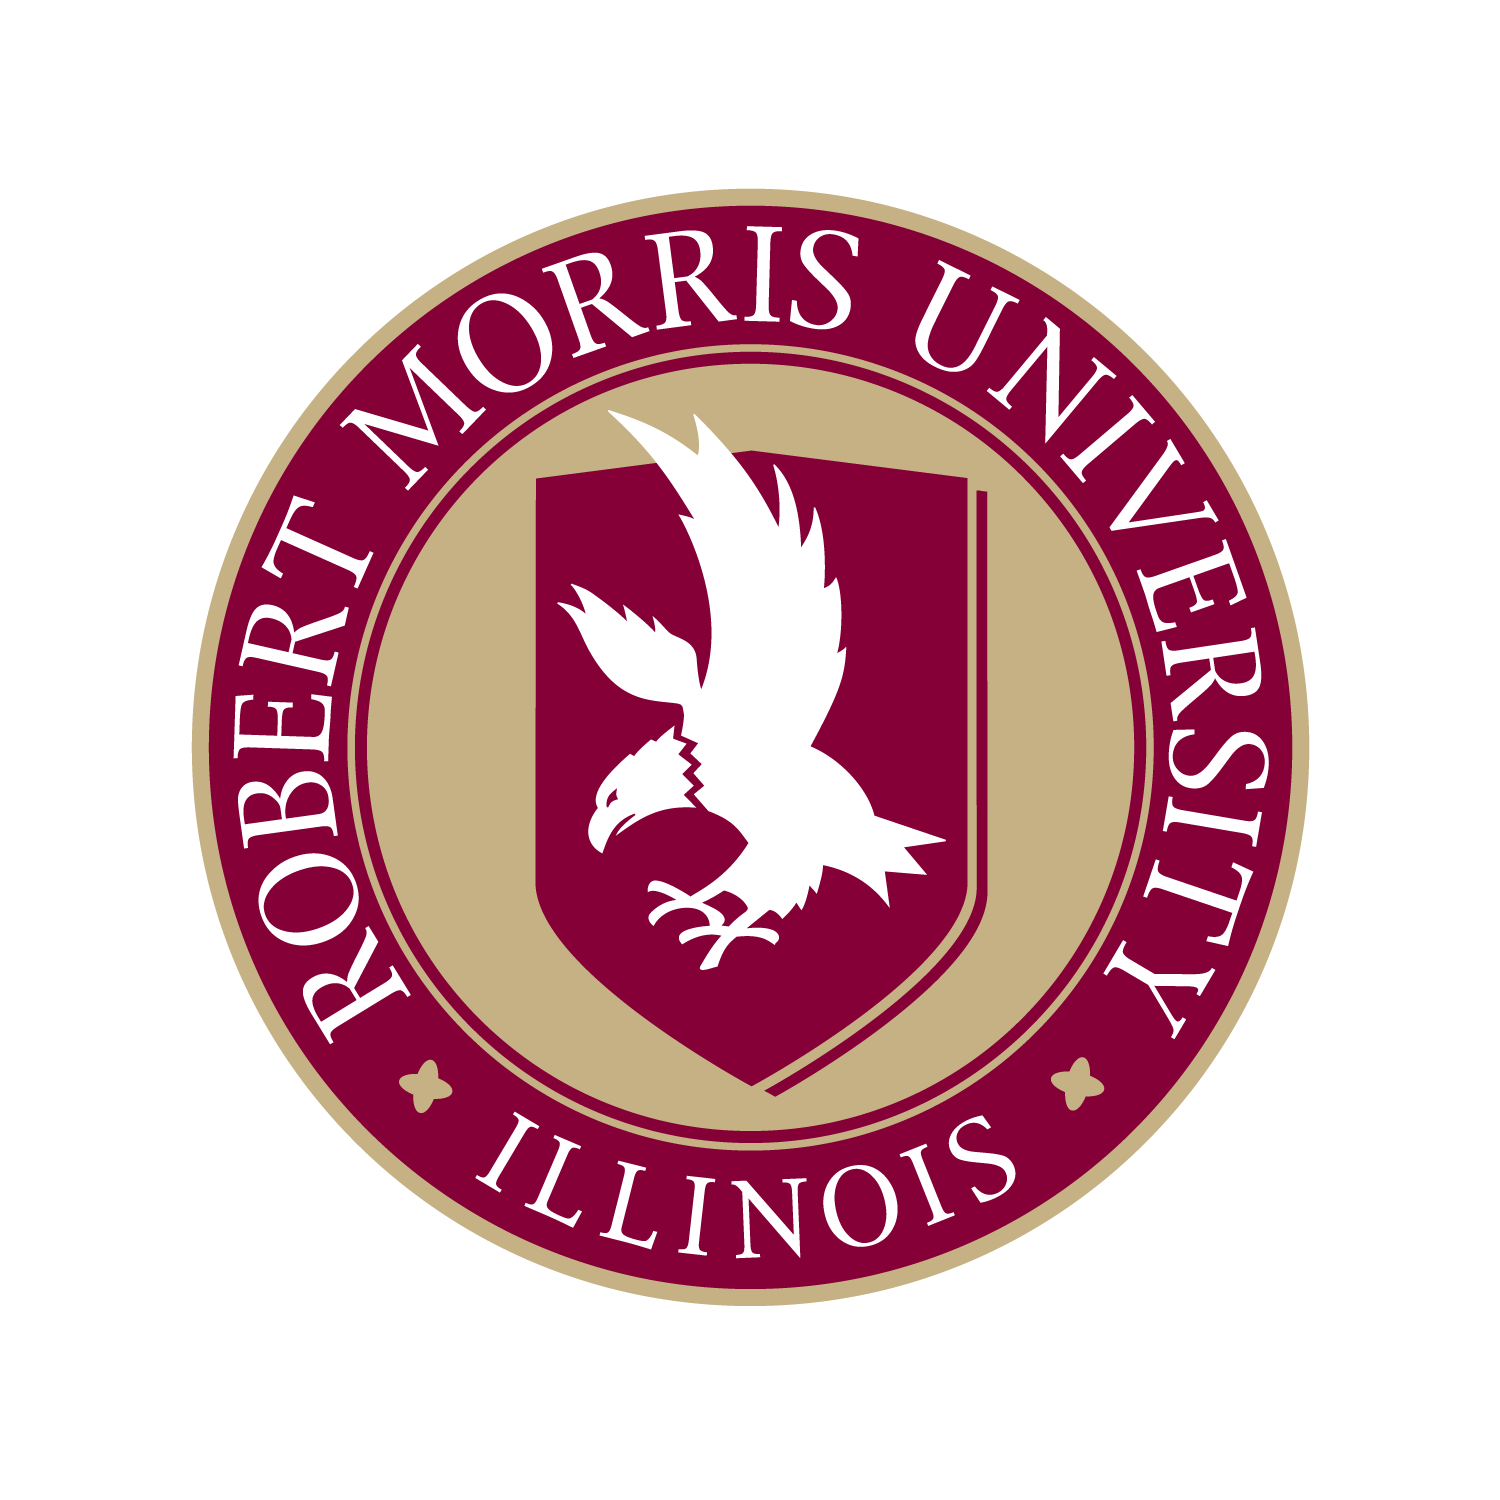 Illinois State Athletics Logo - Experience Makes Experts. Robert Morris University Illinois